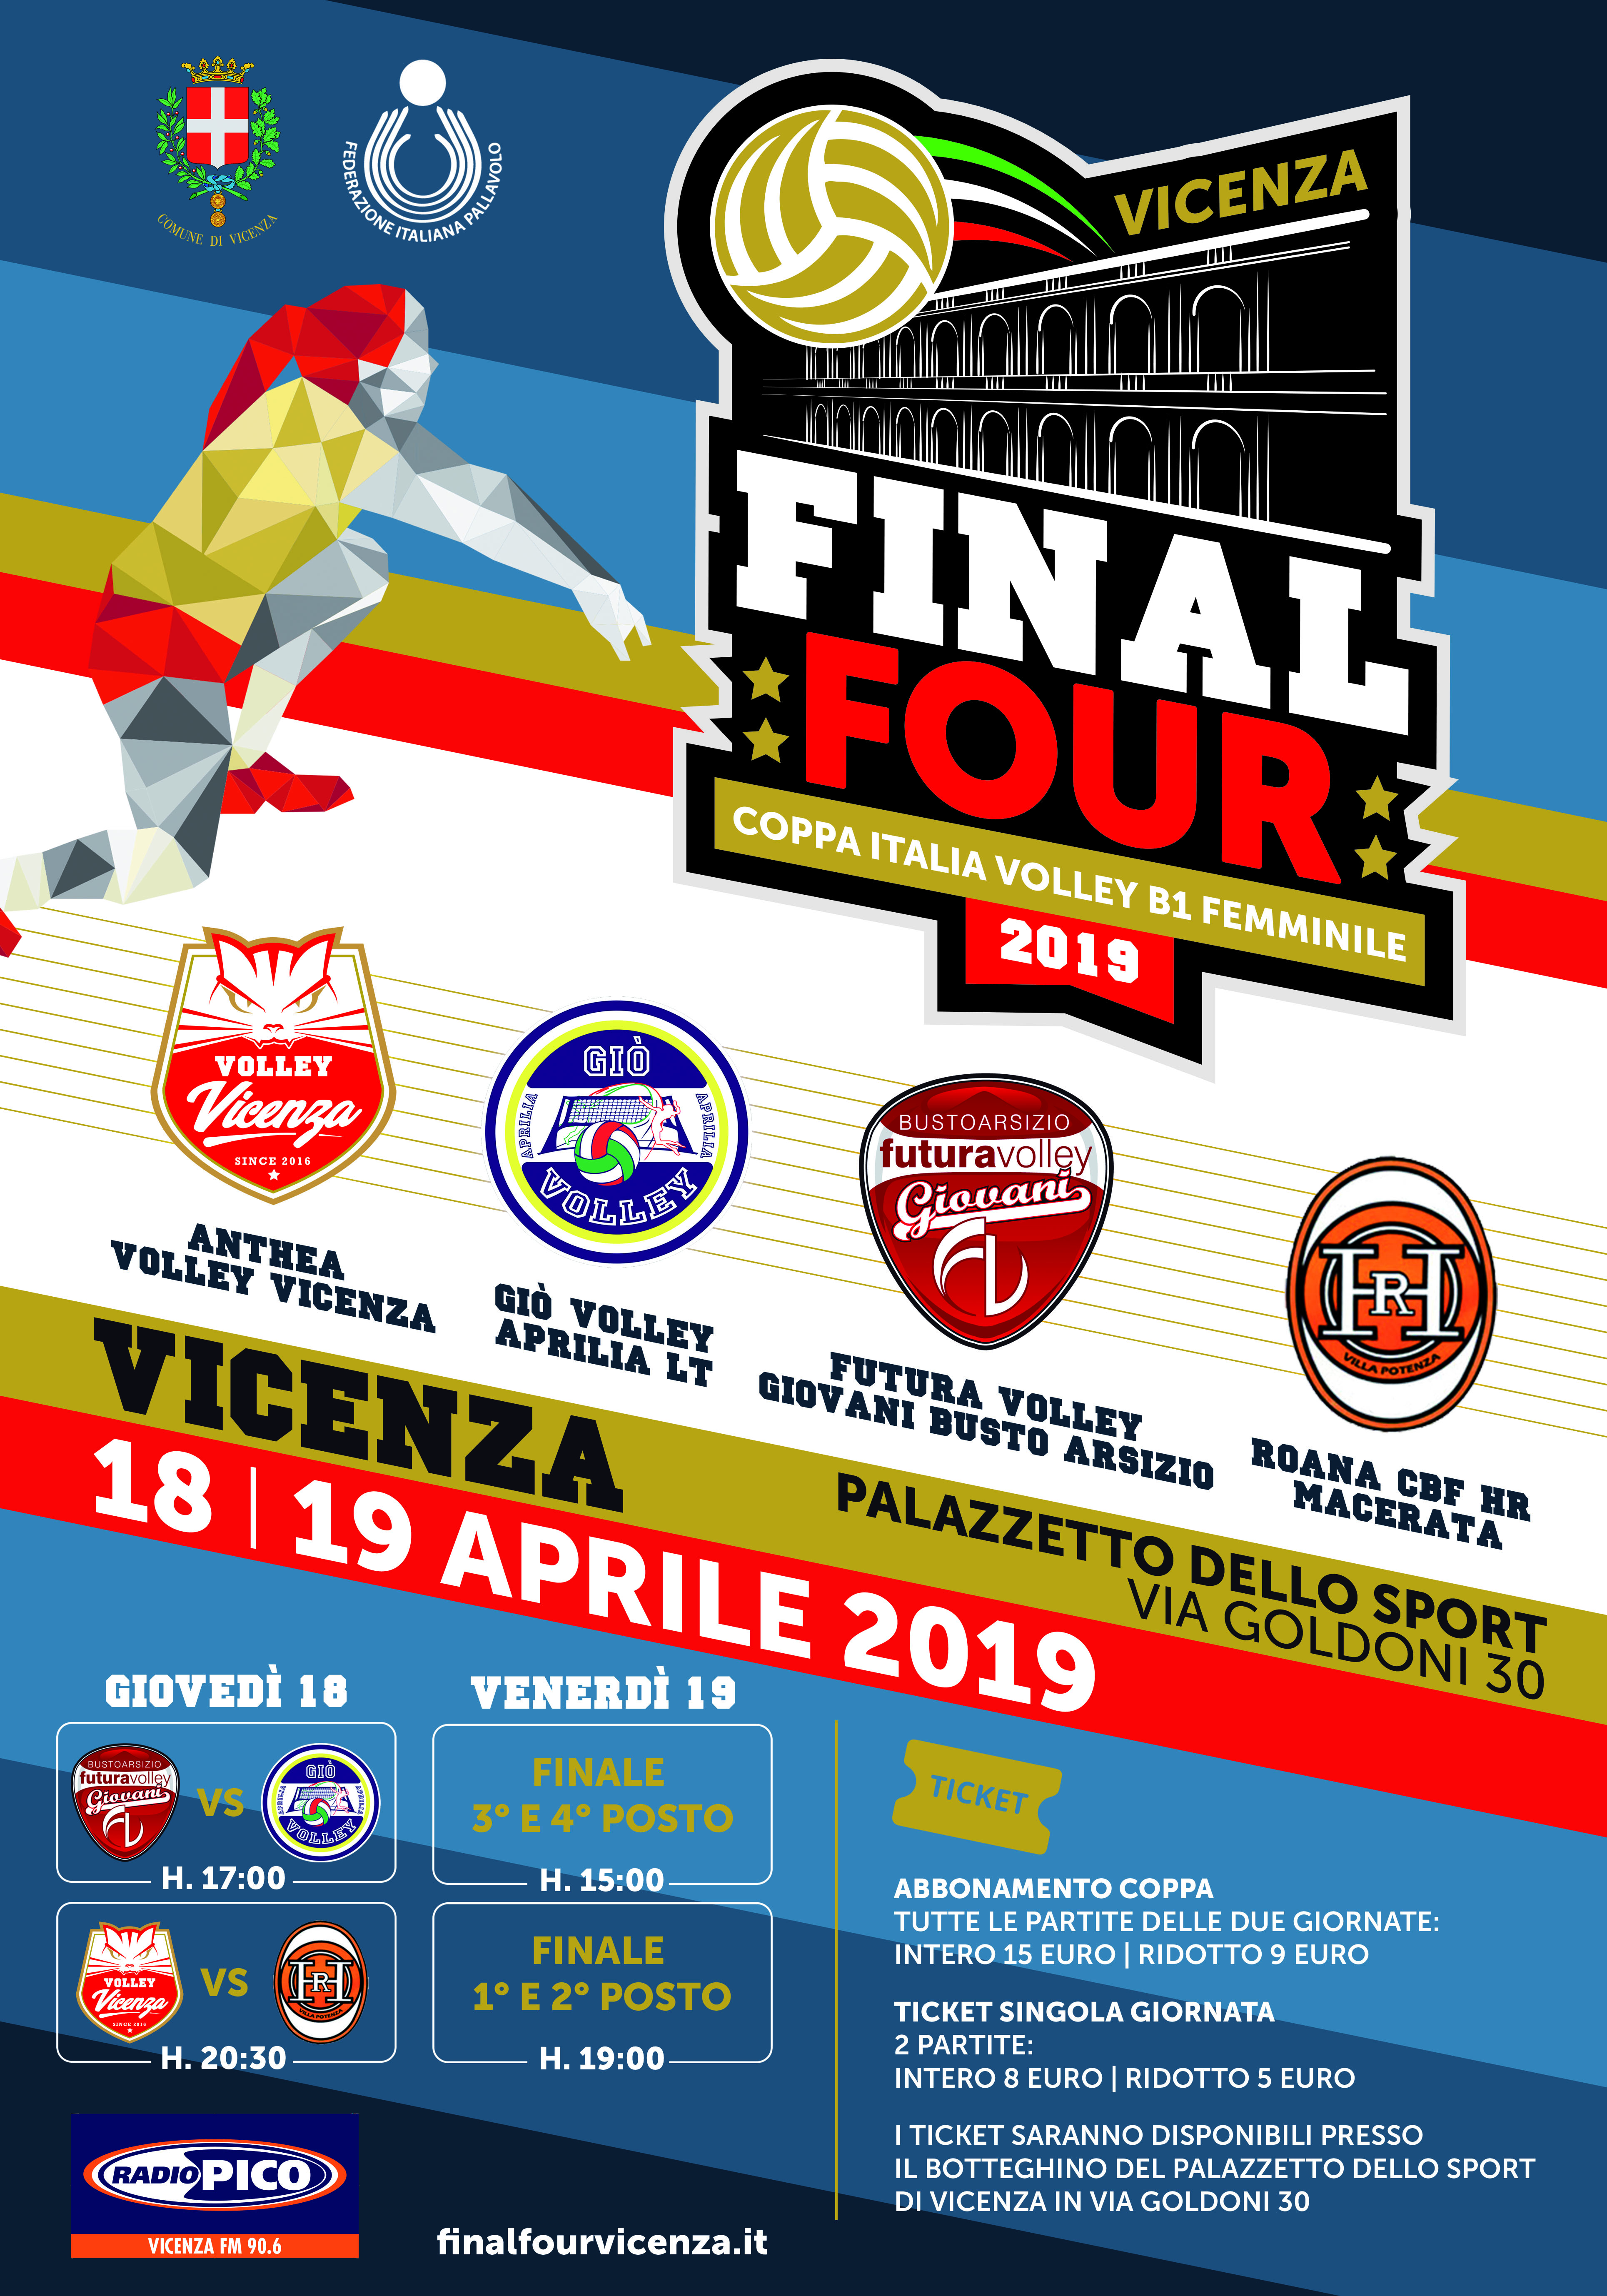 Finali Volley Vicenza